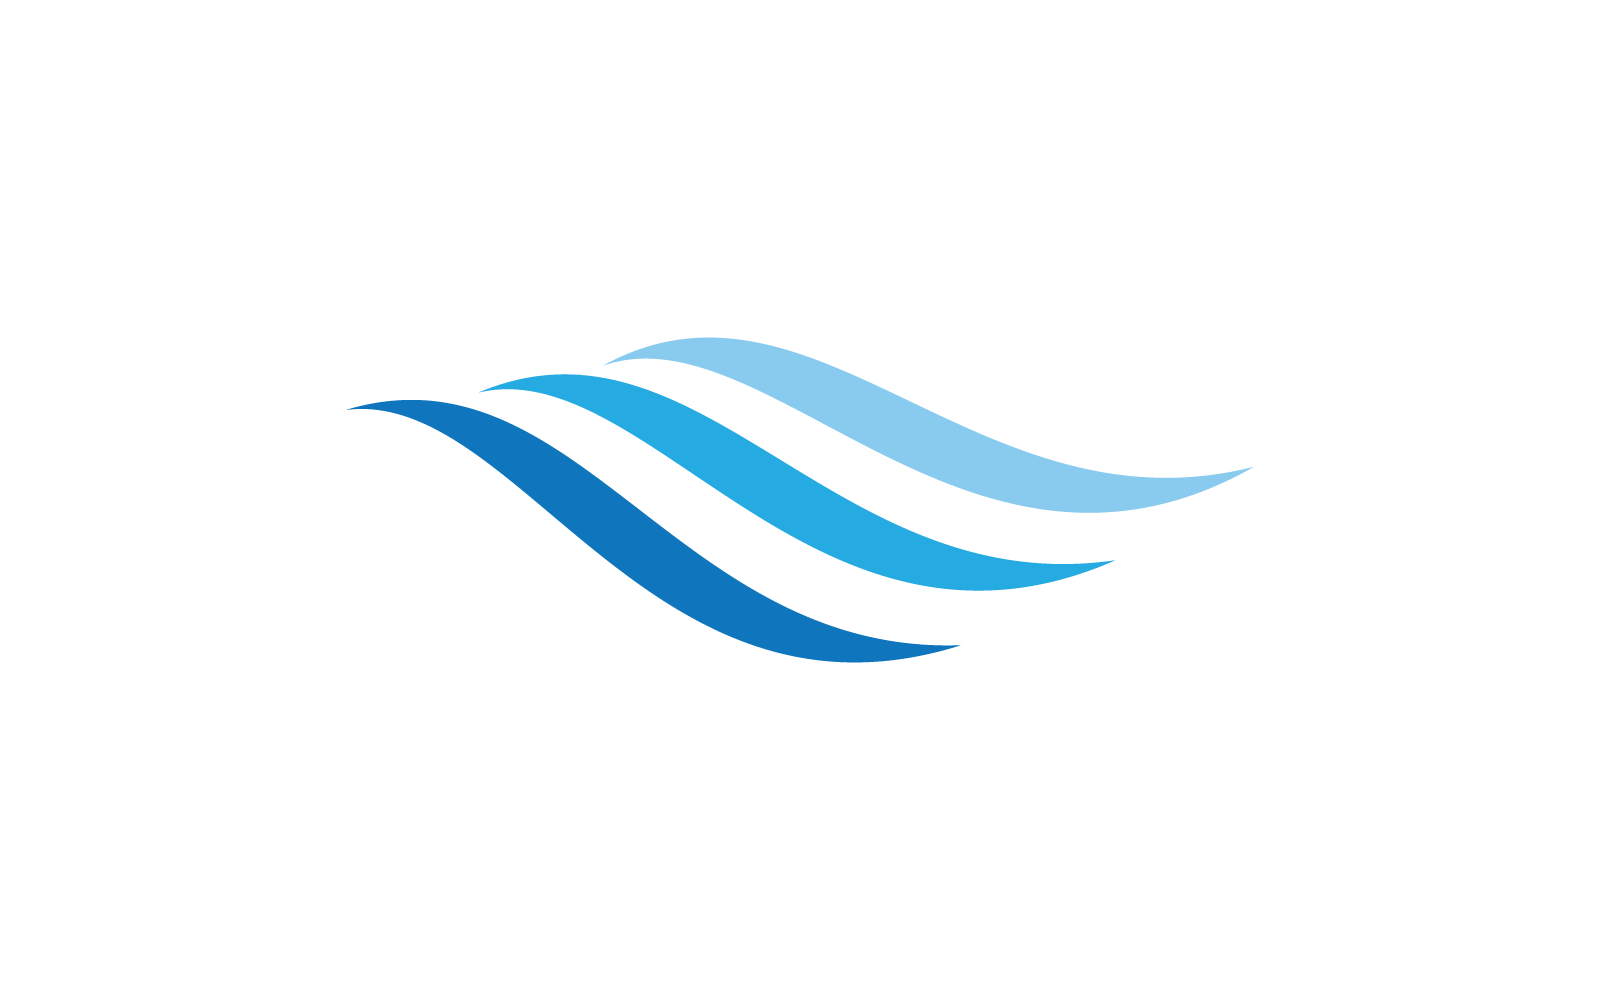 Water Wave illustration logo vector design template